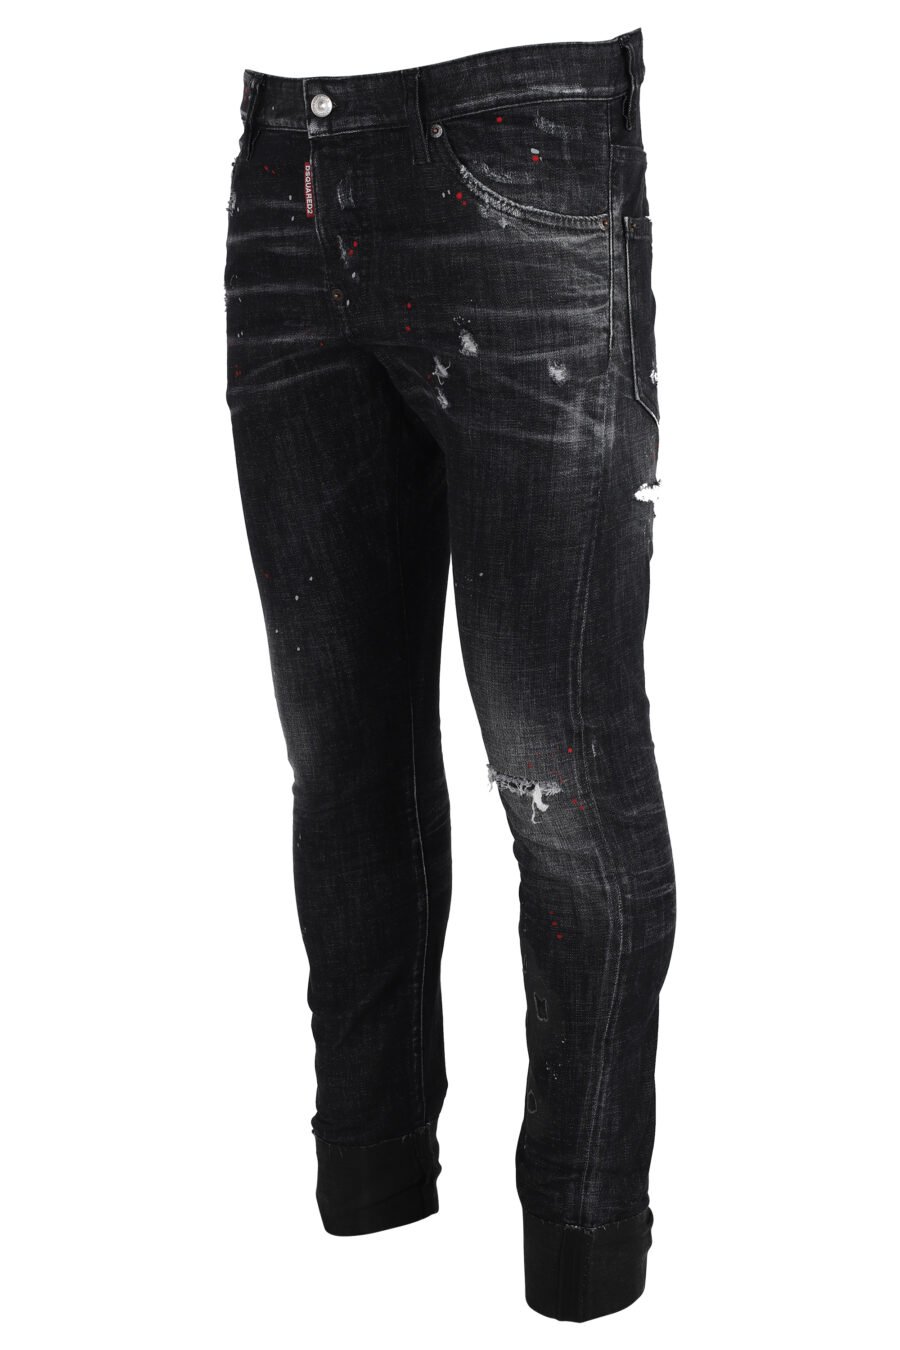 Sexy twist jean trousers black worn - IMG 4853